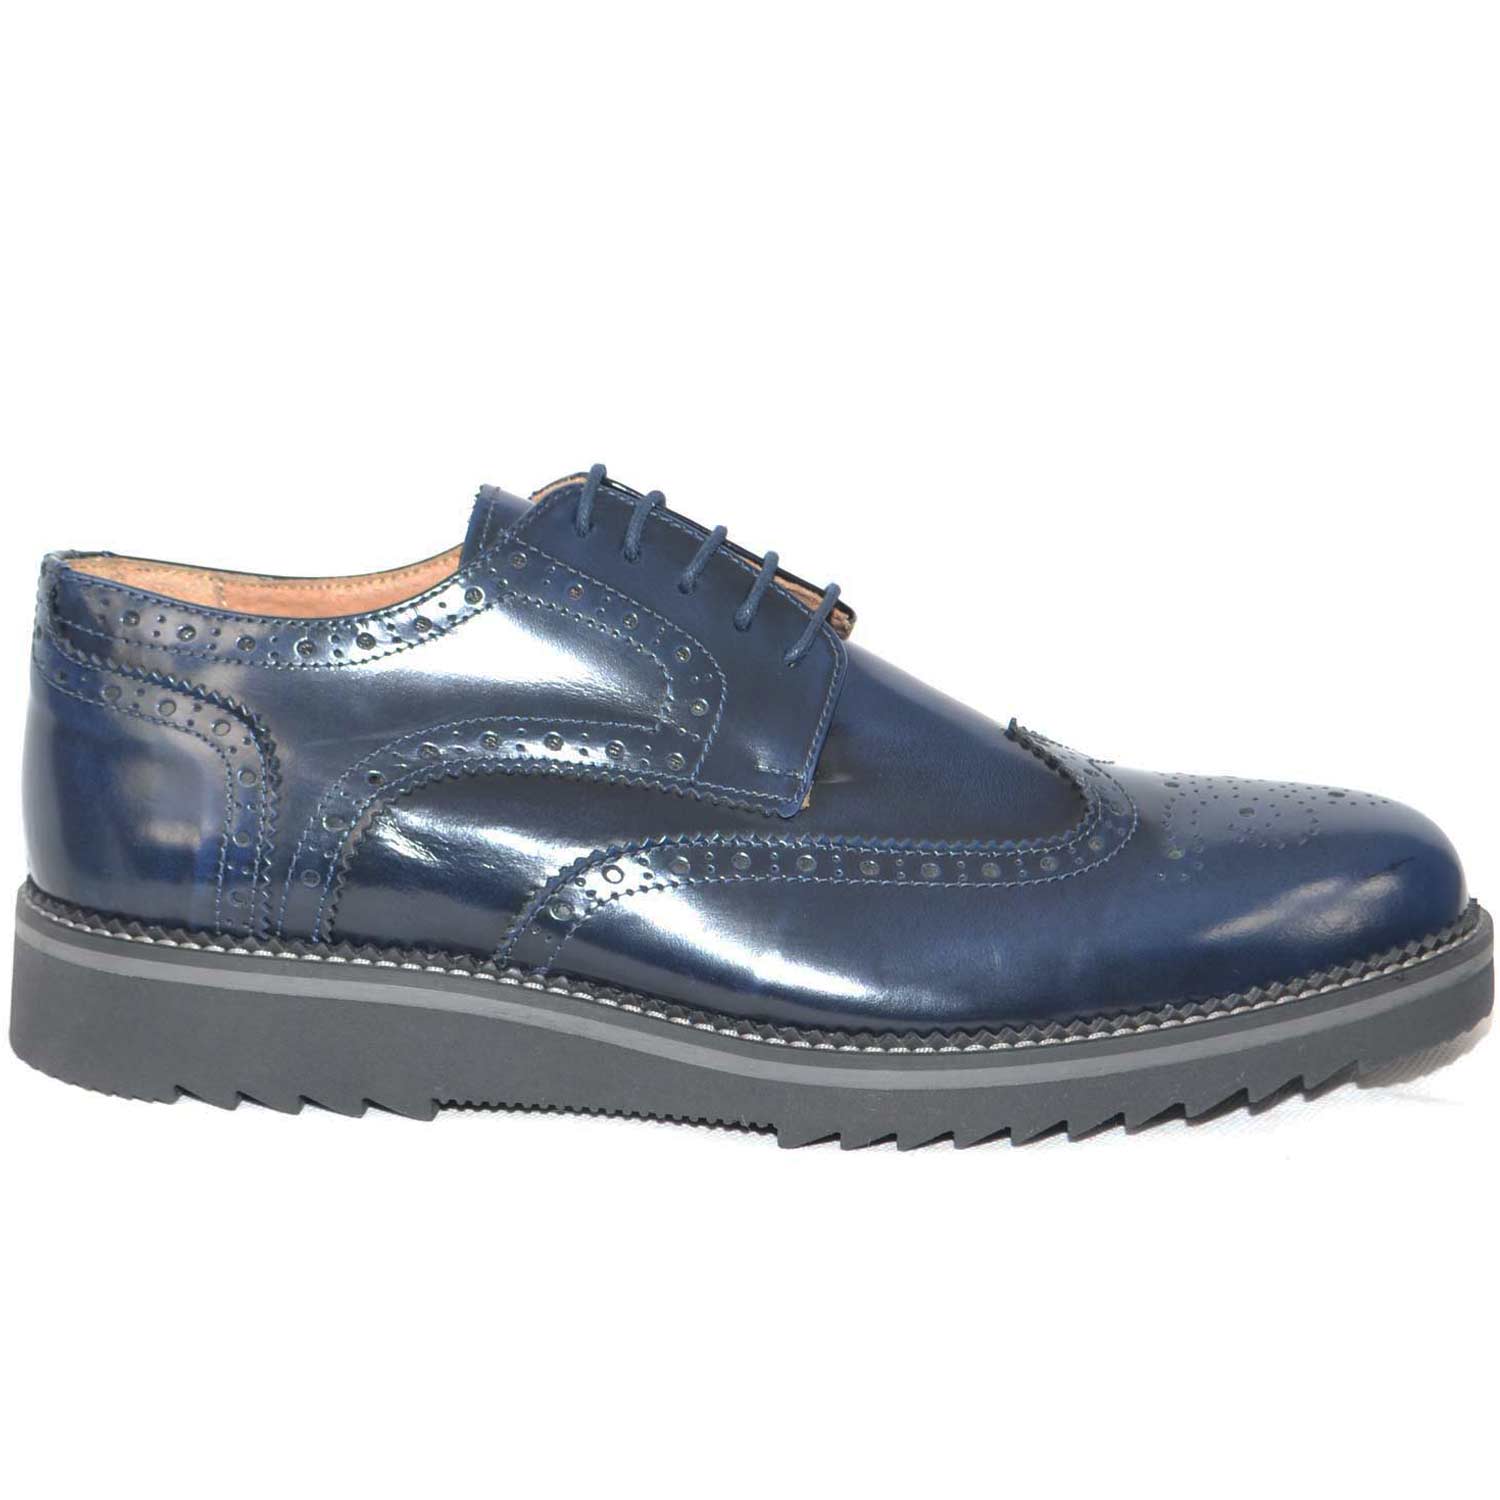 scarpe uomo stringate inglese vera pelle abrasivato blu made in italy fondo  furi | eBay